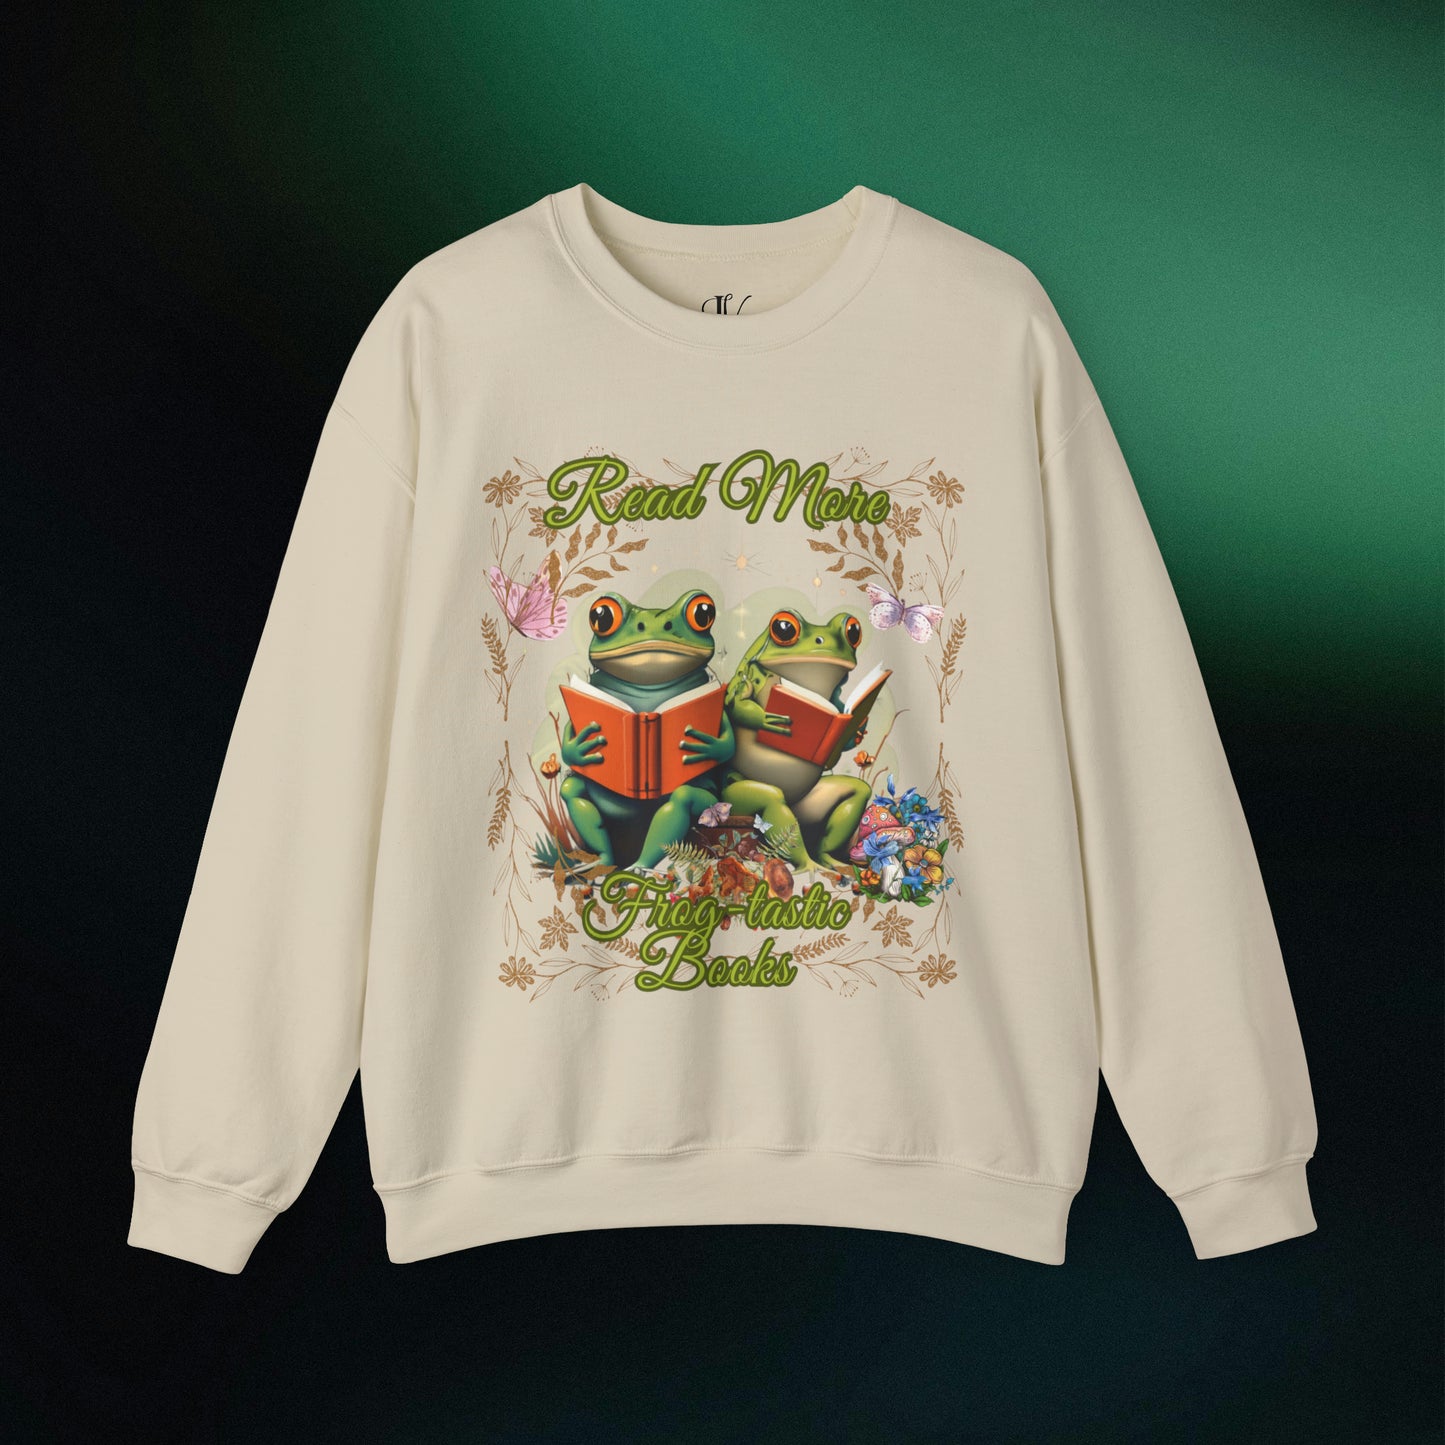 Frog Bookworm Sweatshirt | Read More Books Shirt | Aesthetic, Vintage Frog Sweatshirt Sweatshirt S Sand 